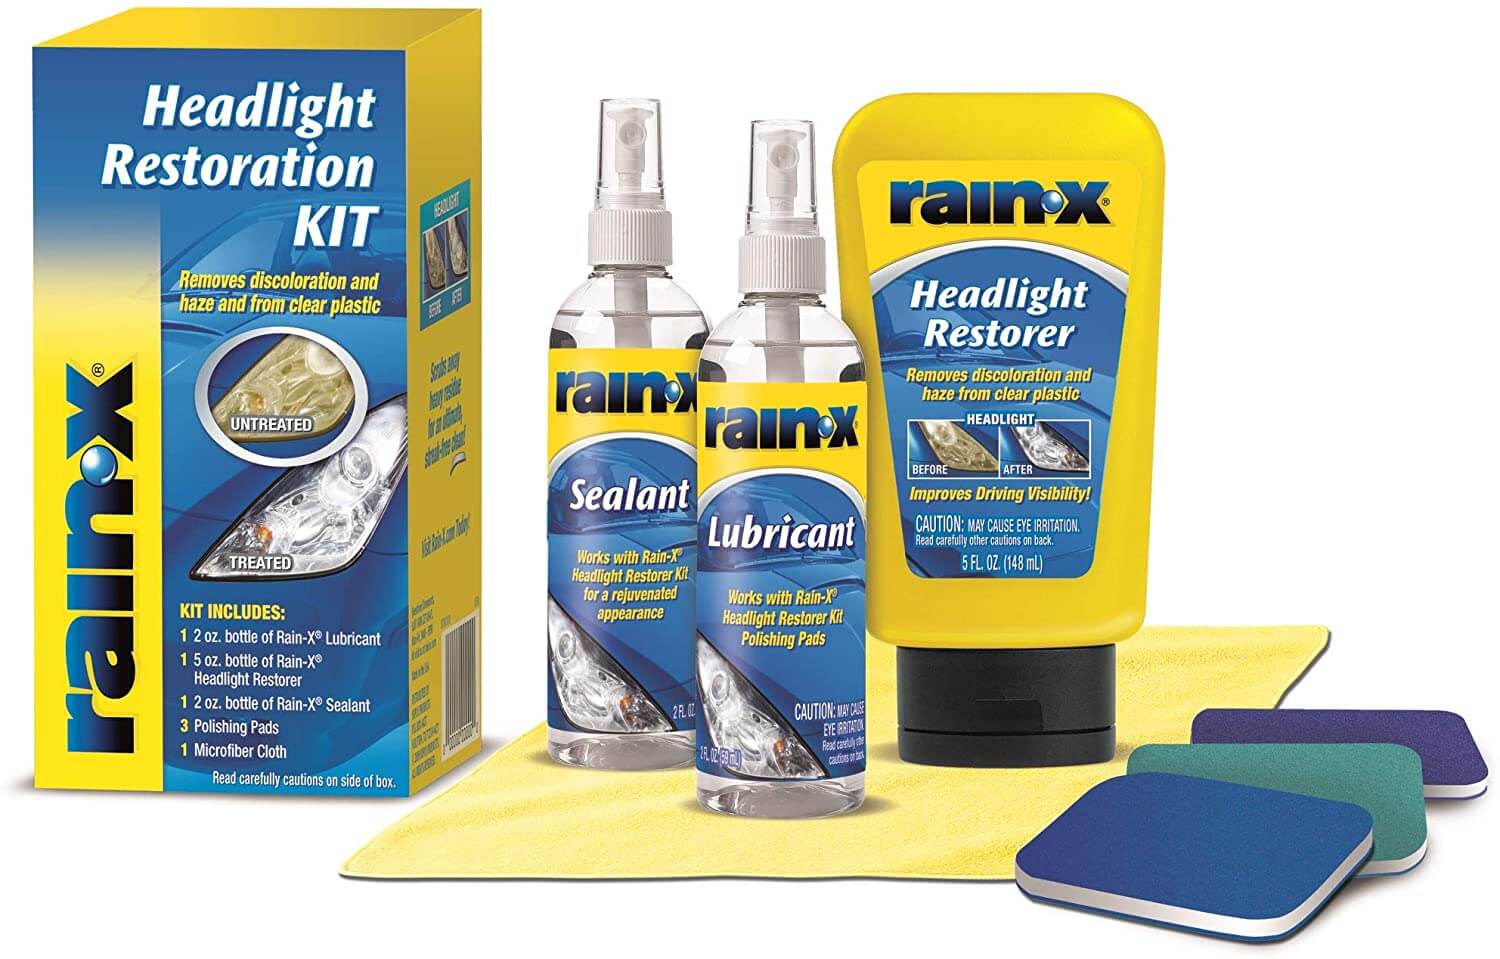 Rainx headlight restoration kit